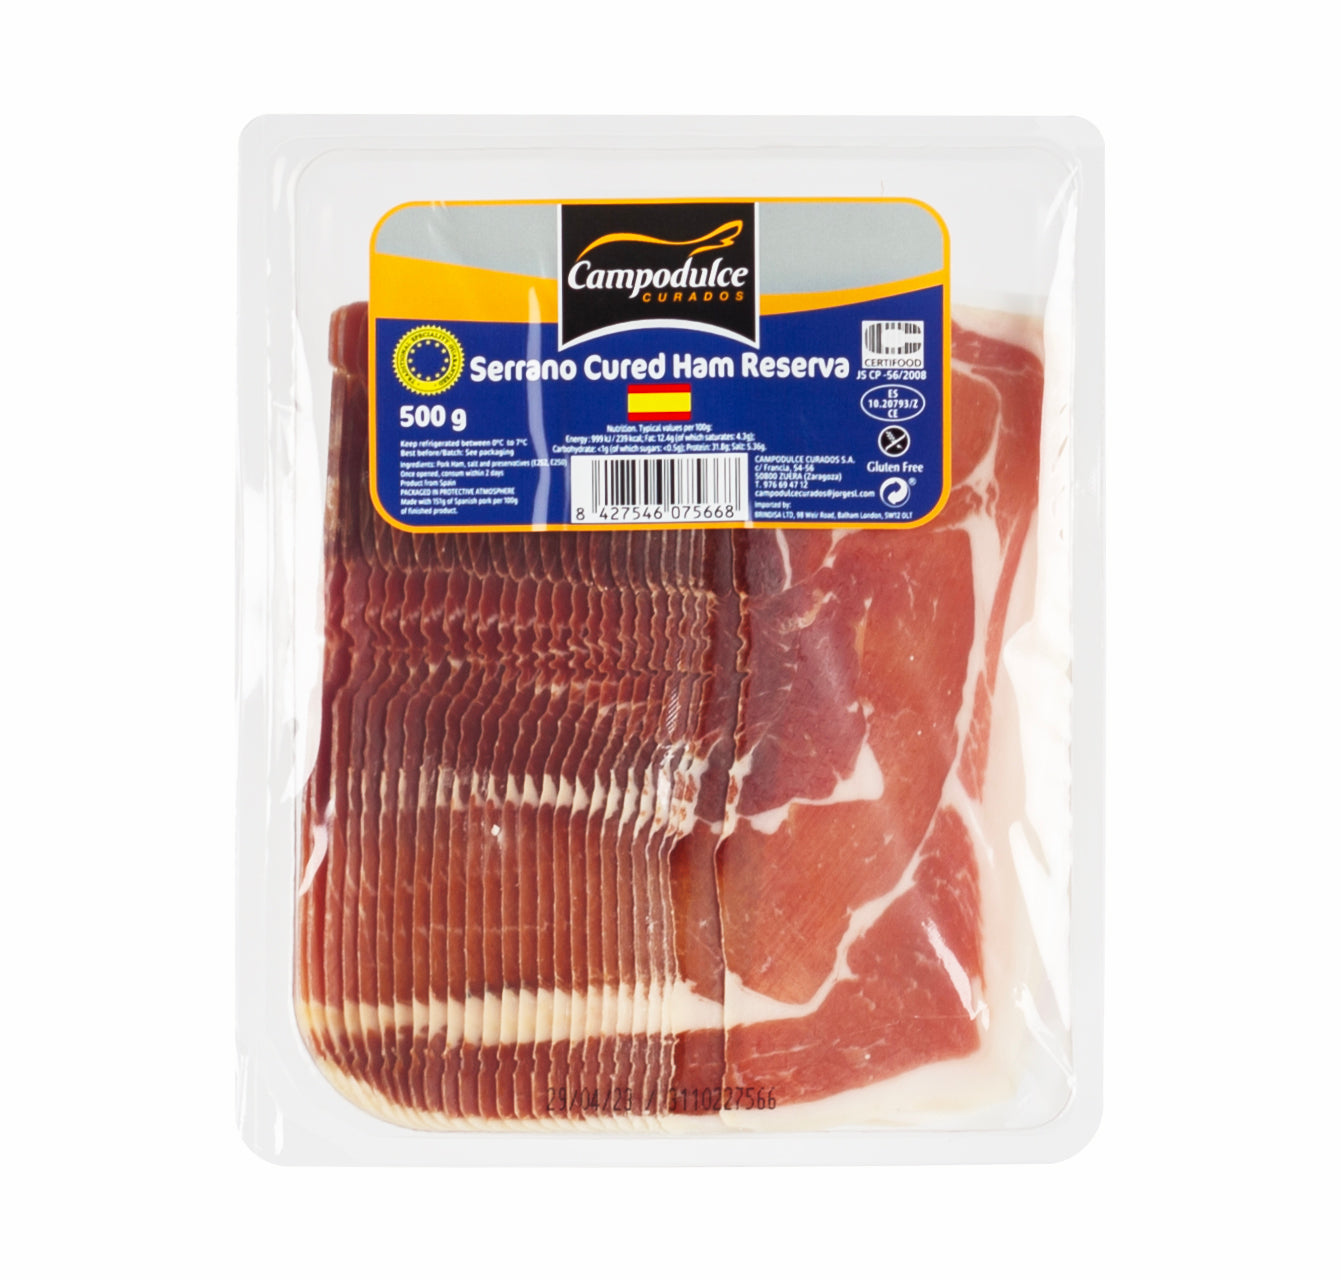 sliced serrano ham